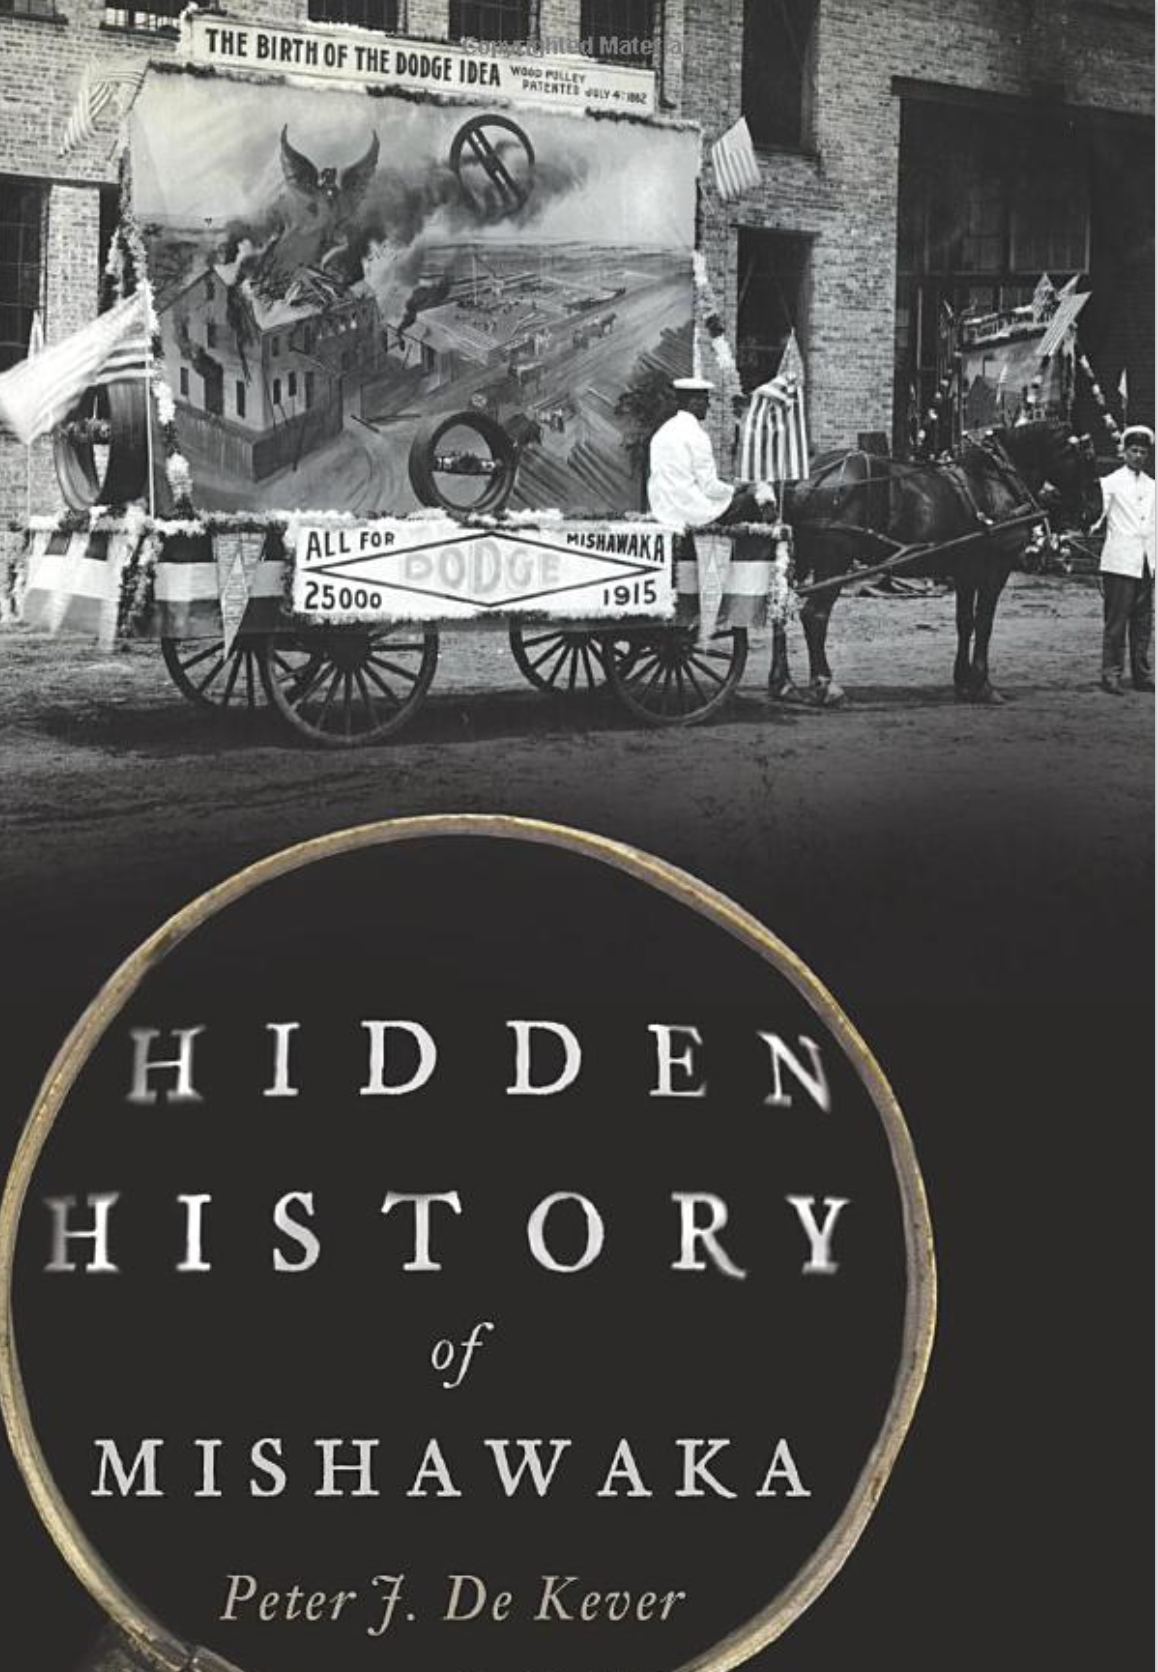 Hidden History of Mishawaka by Peter J. De Kever